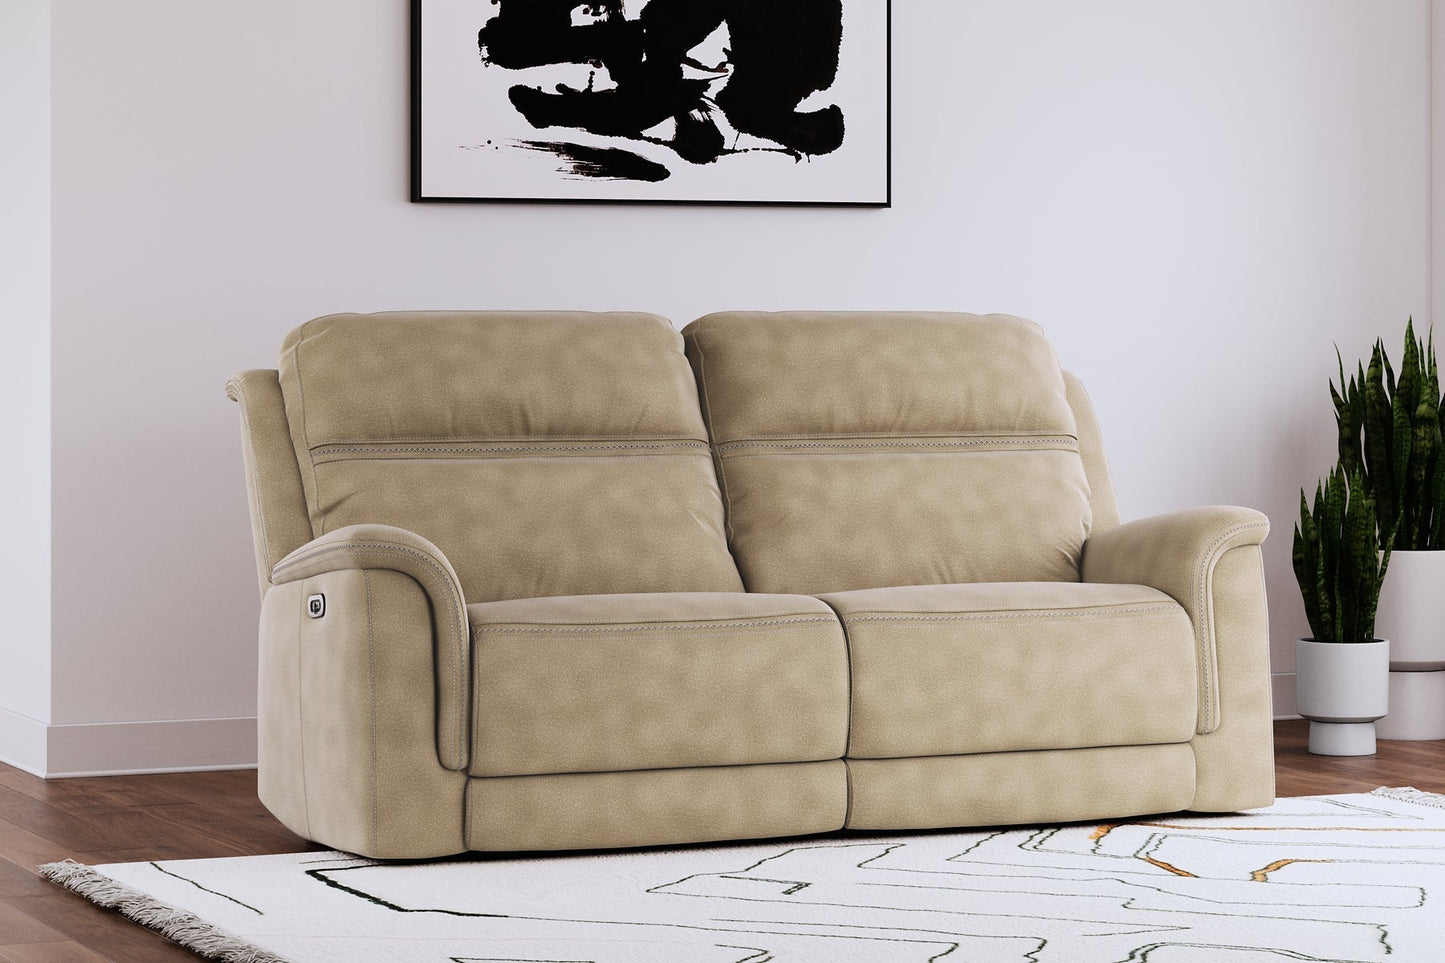 Next-Gen DuraPella 2 Seat PWR REC Sofa ADJ HDREST at Towne & Country Furniture (AL) furniture, home furniture, home decor, sofa, bedding